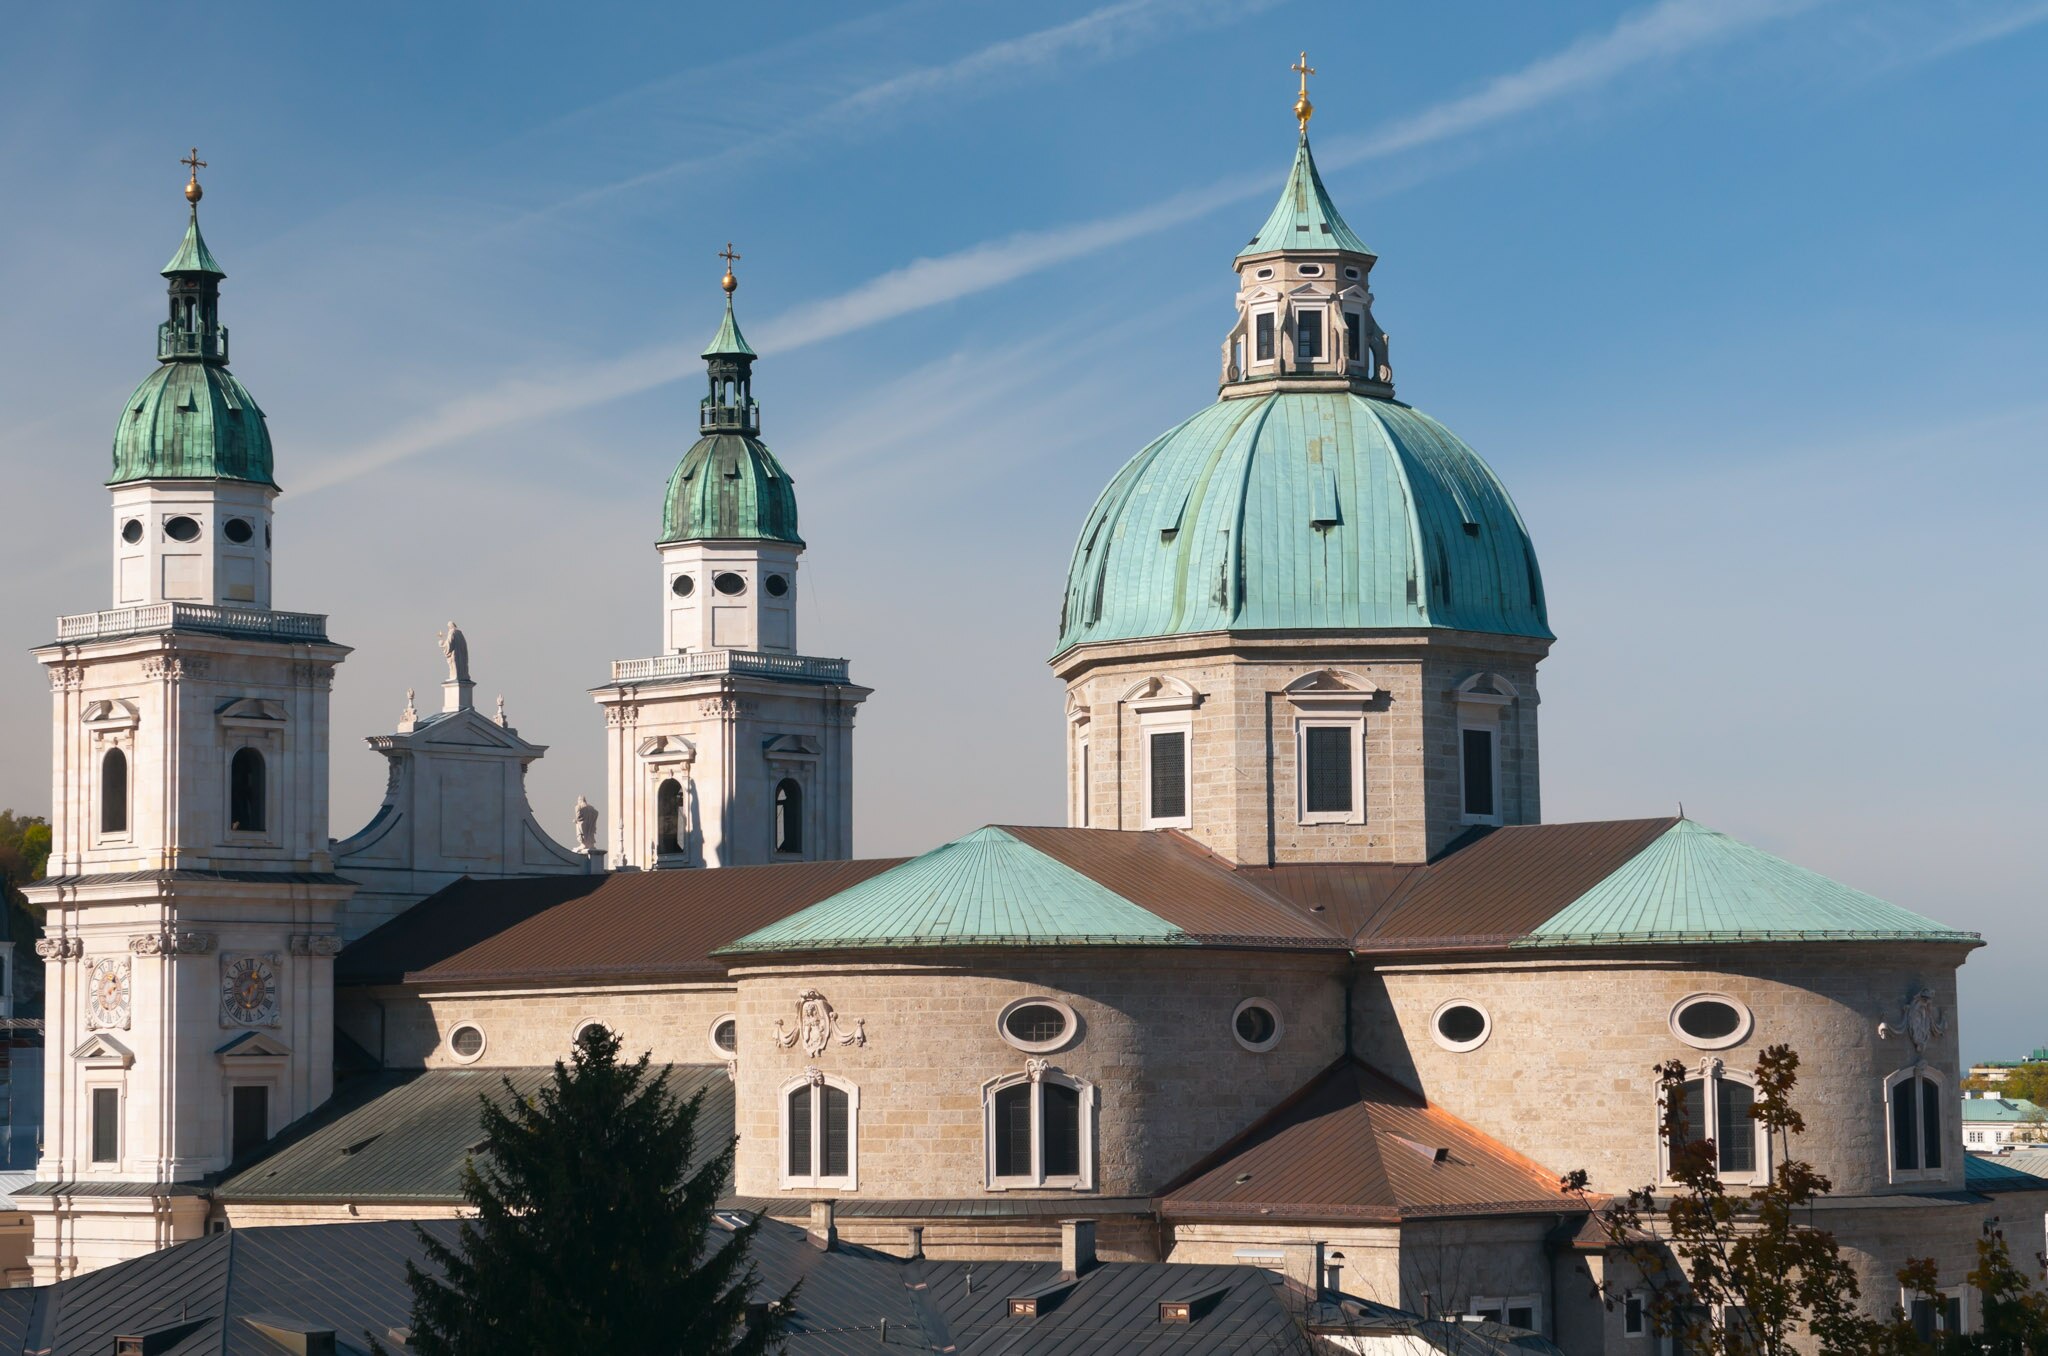 Salzburg Cathedral (Dom)